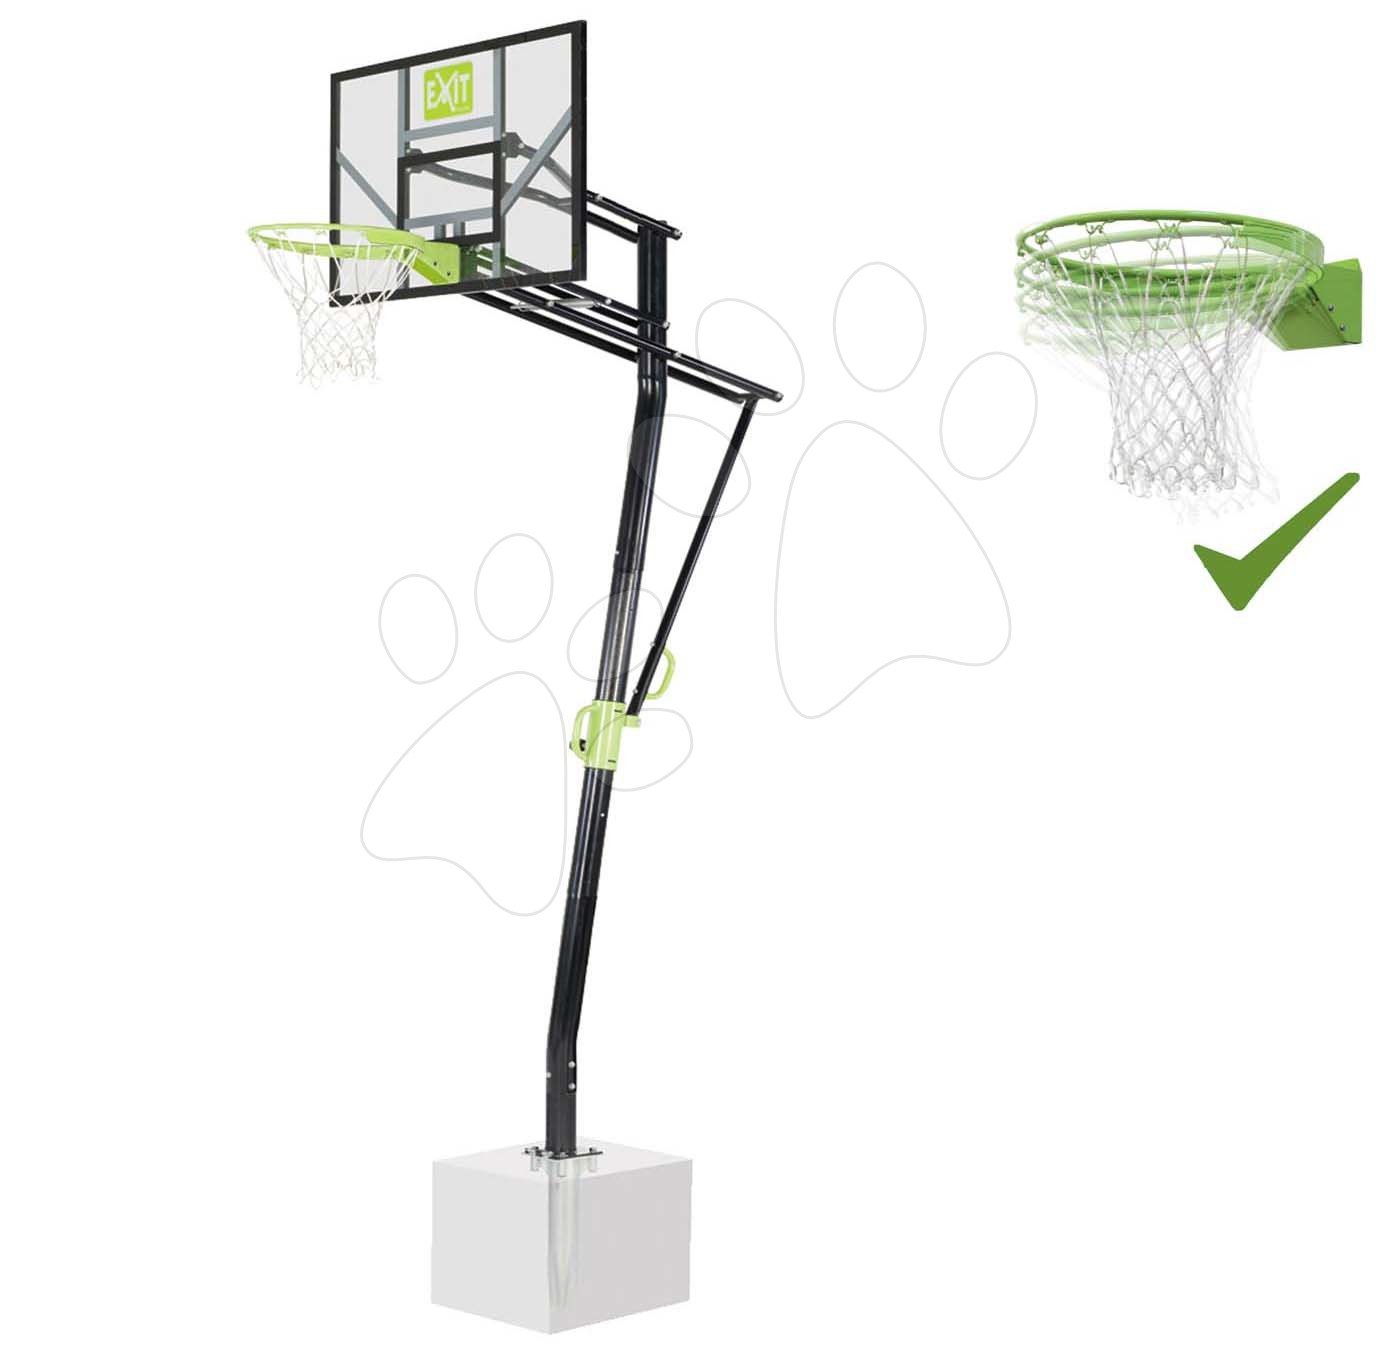 EXIT Galaxy basketball backboard for installing wi